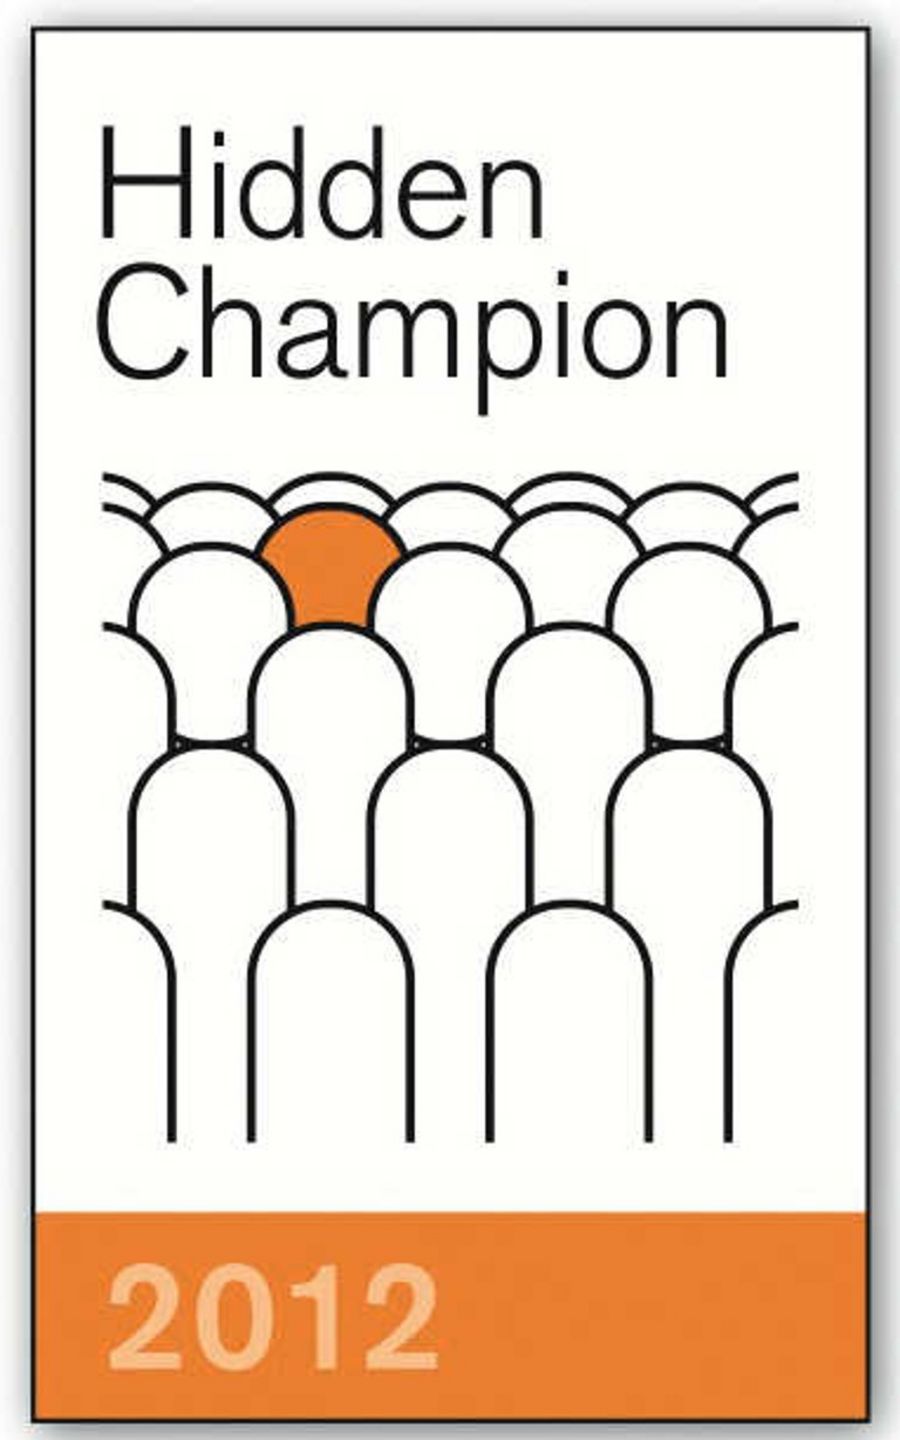 Hidden Champion 2012